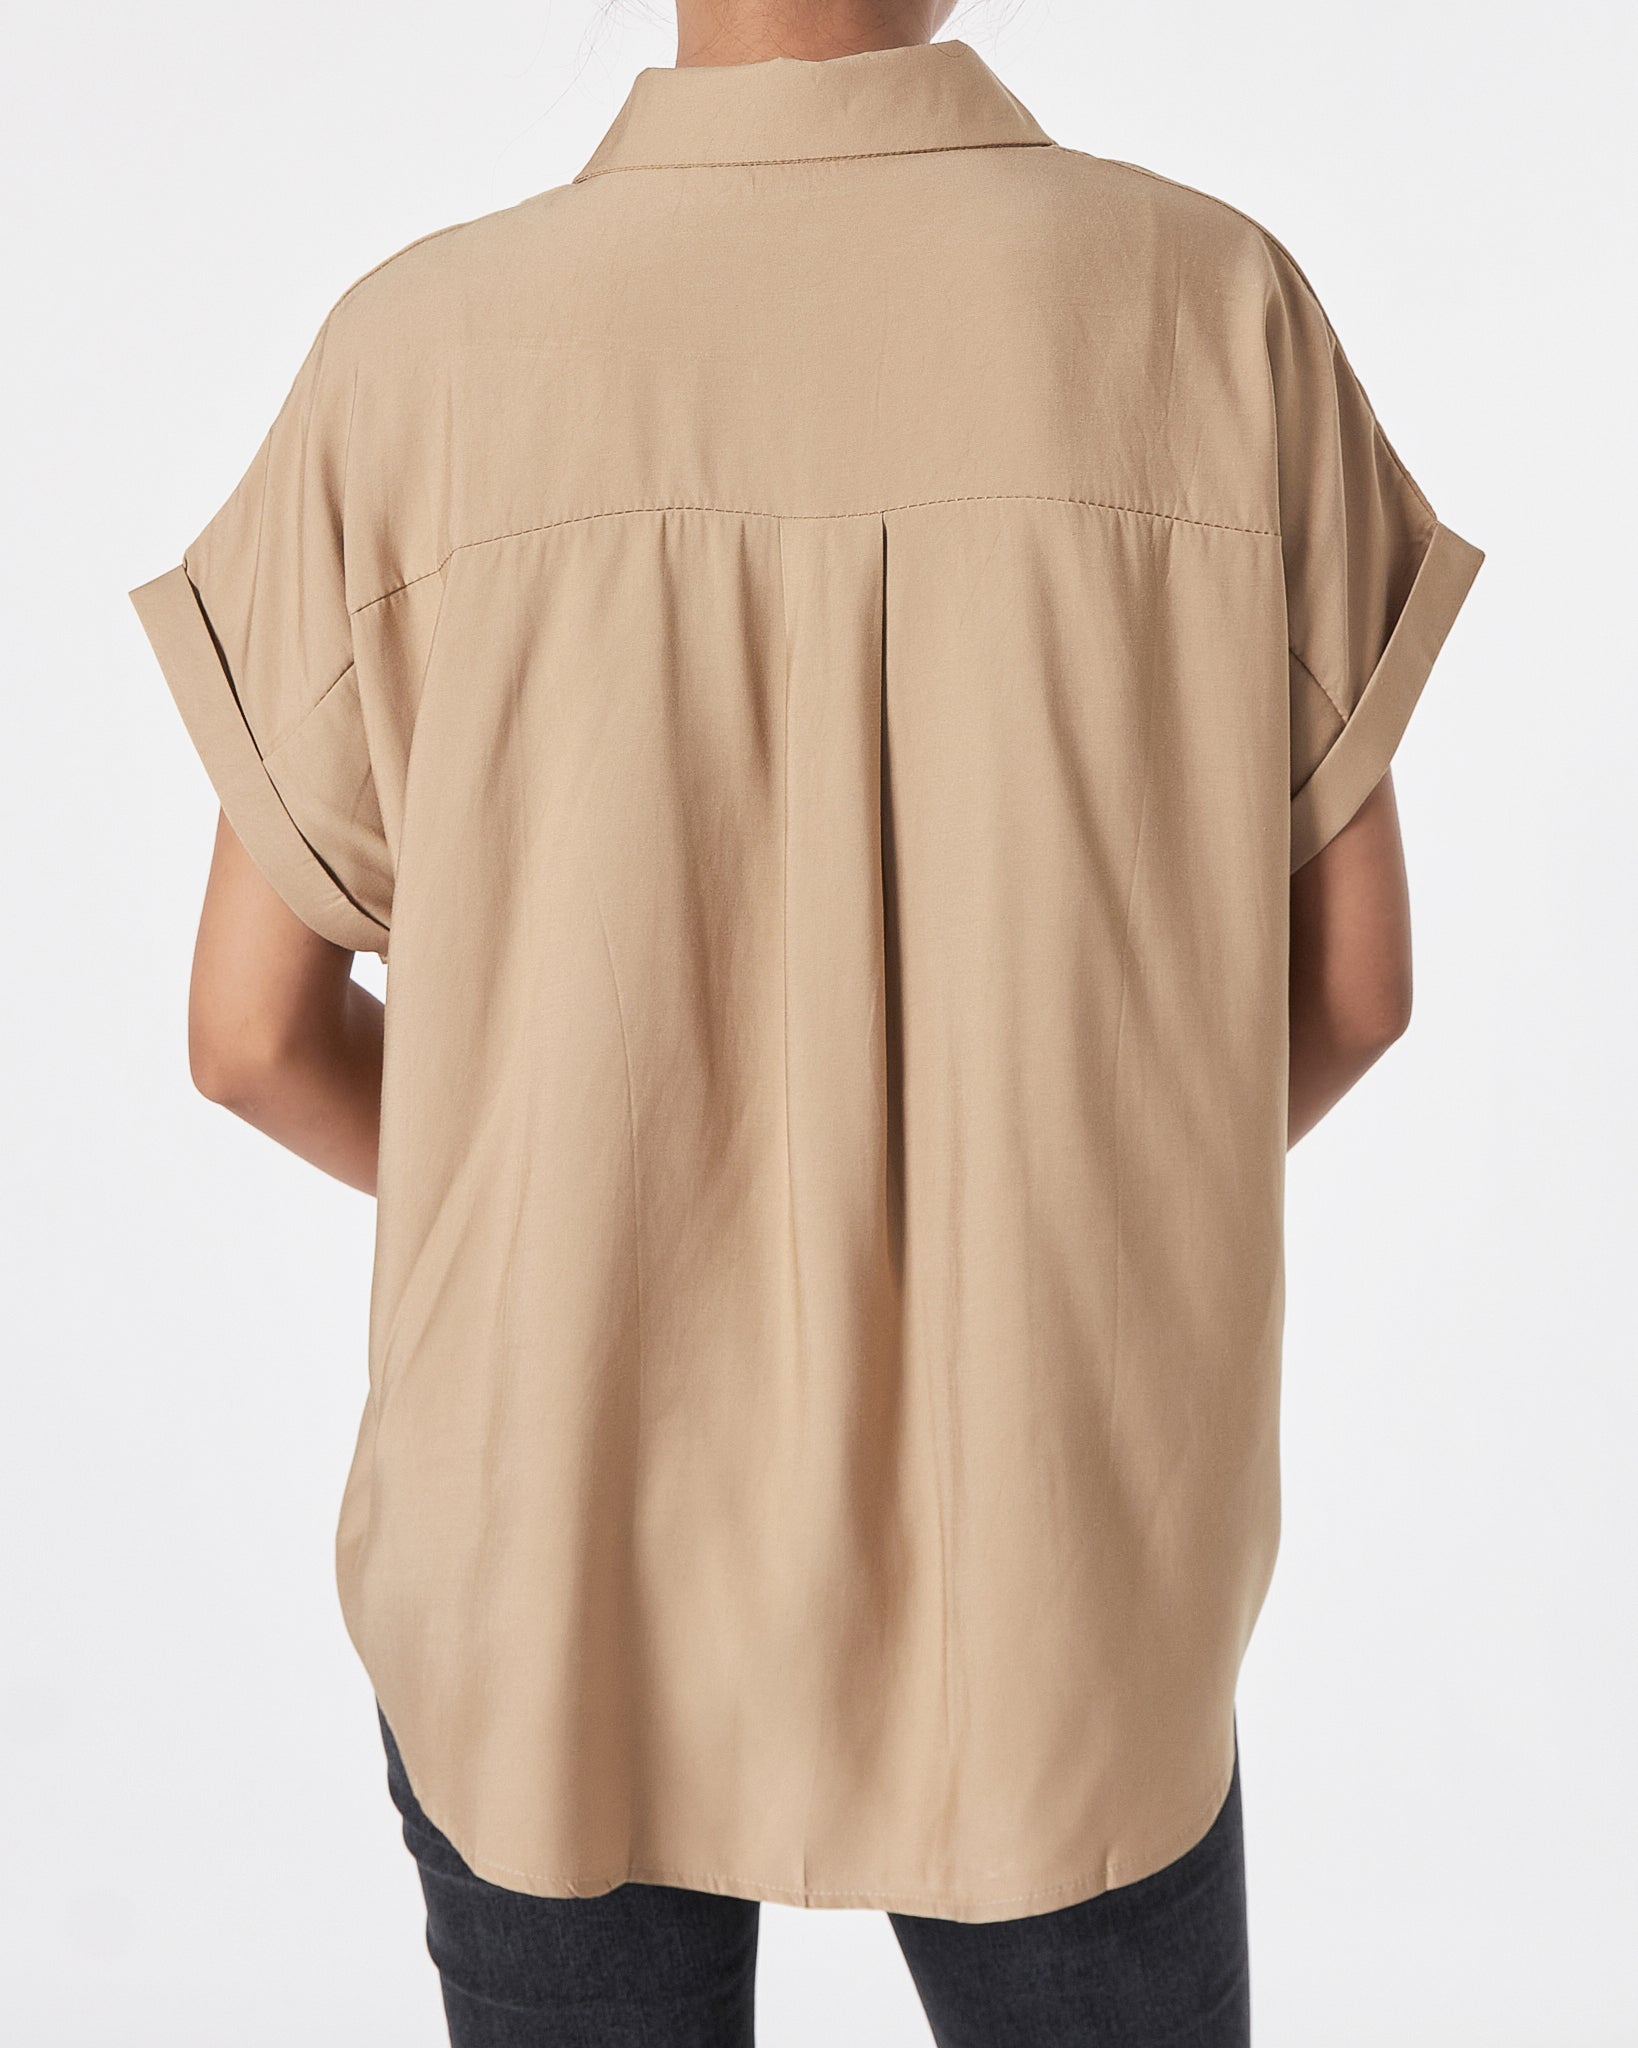 Lady Cream Satin Shirts Short Sleeve 17.90